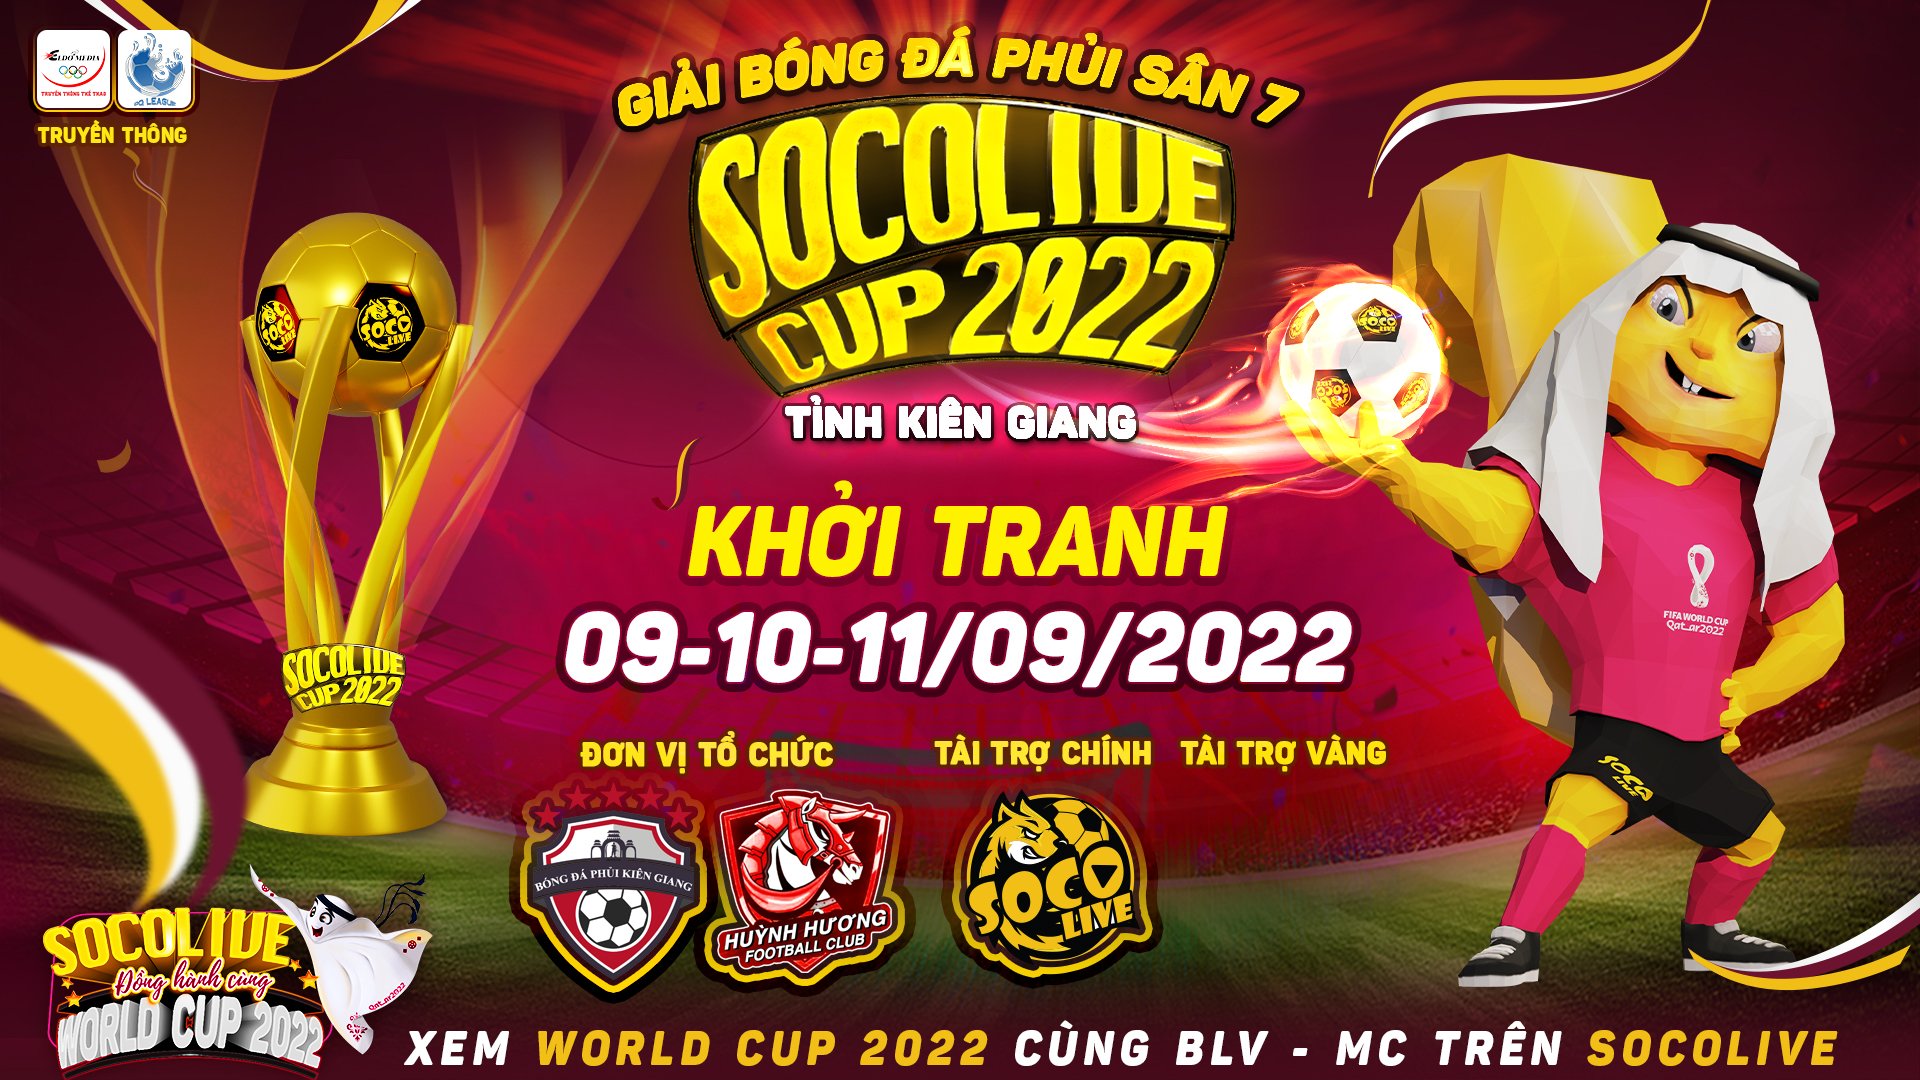 Socolive-cup-2022-chinh-thuc-khoi-tranh-tai-Kien-Giang